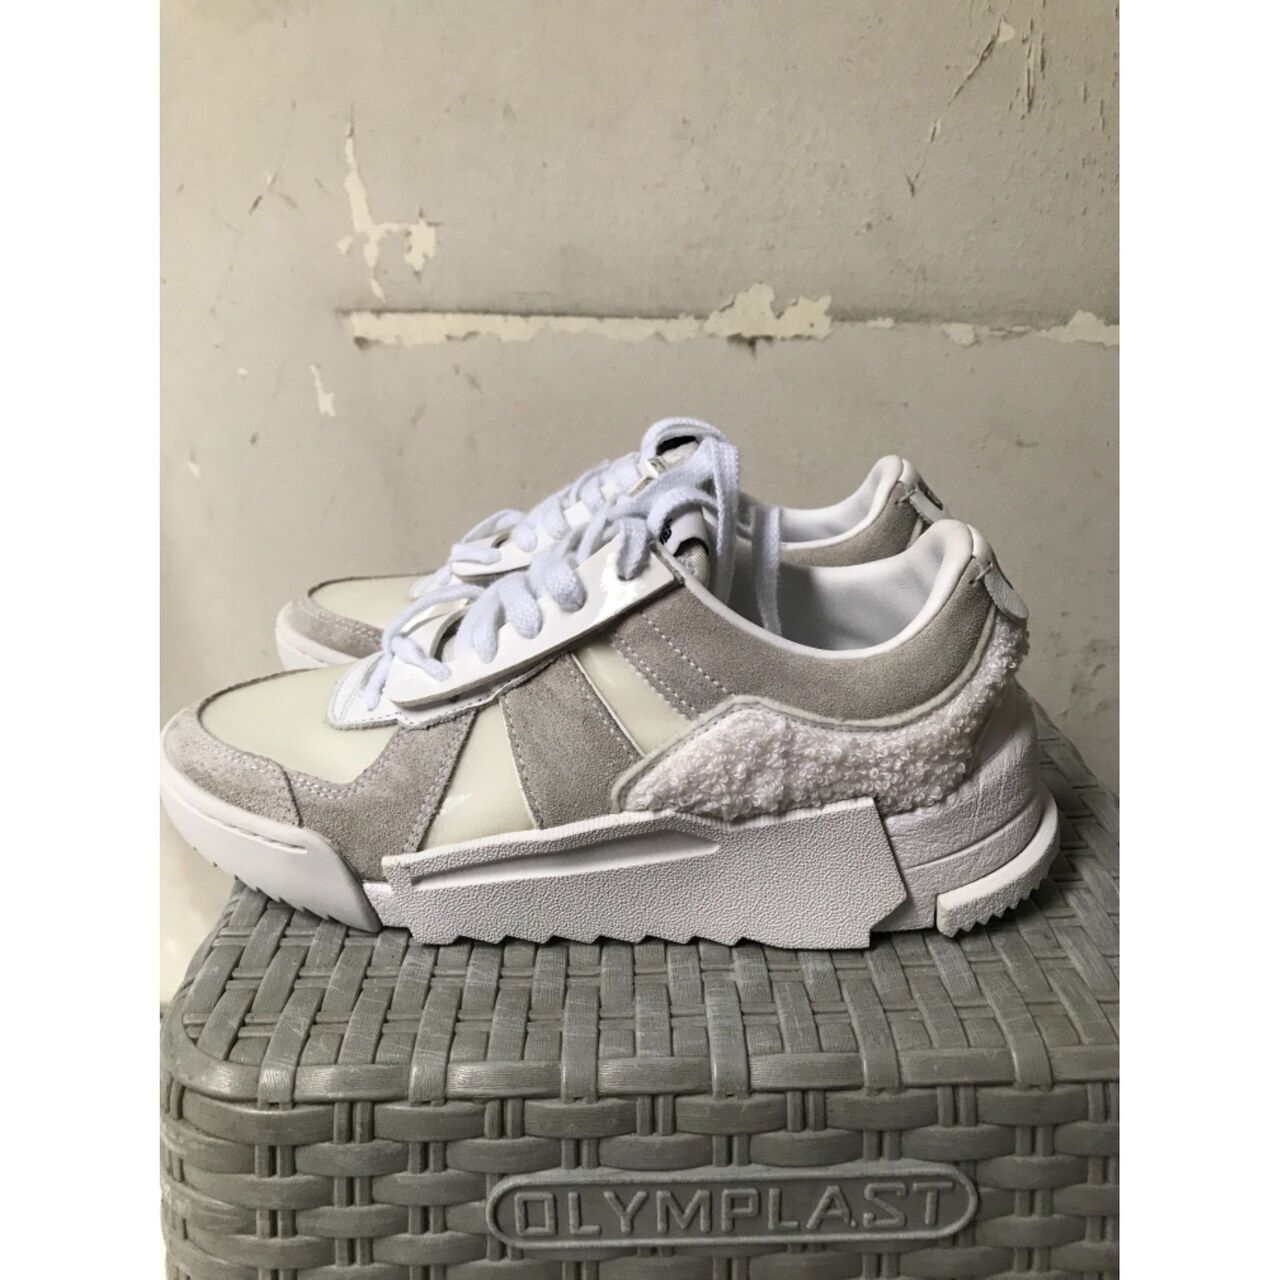 Onitsuka Tiger White & Off White Sneakers